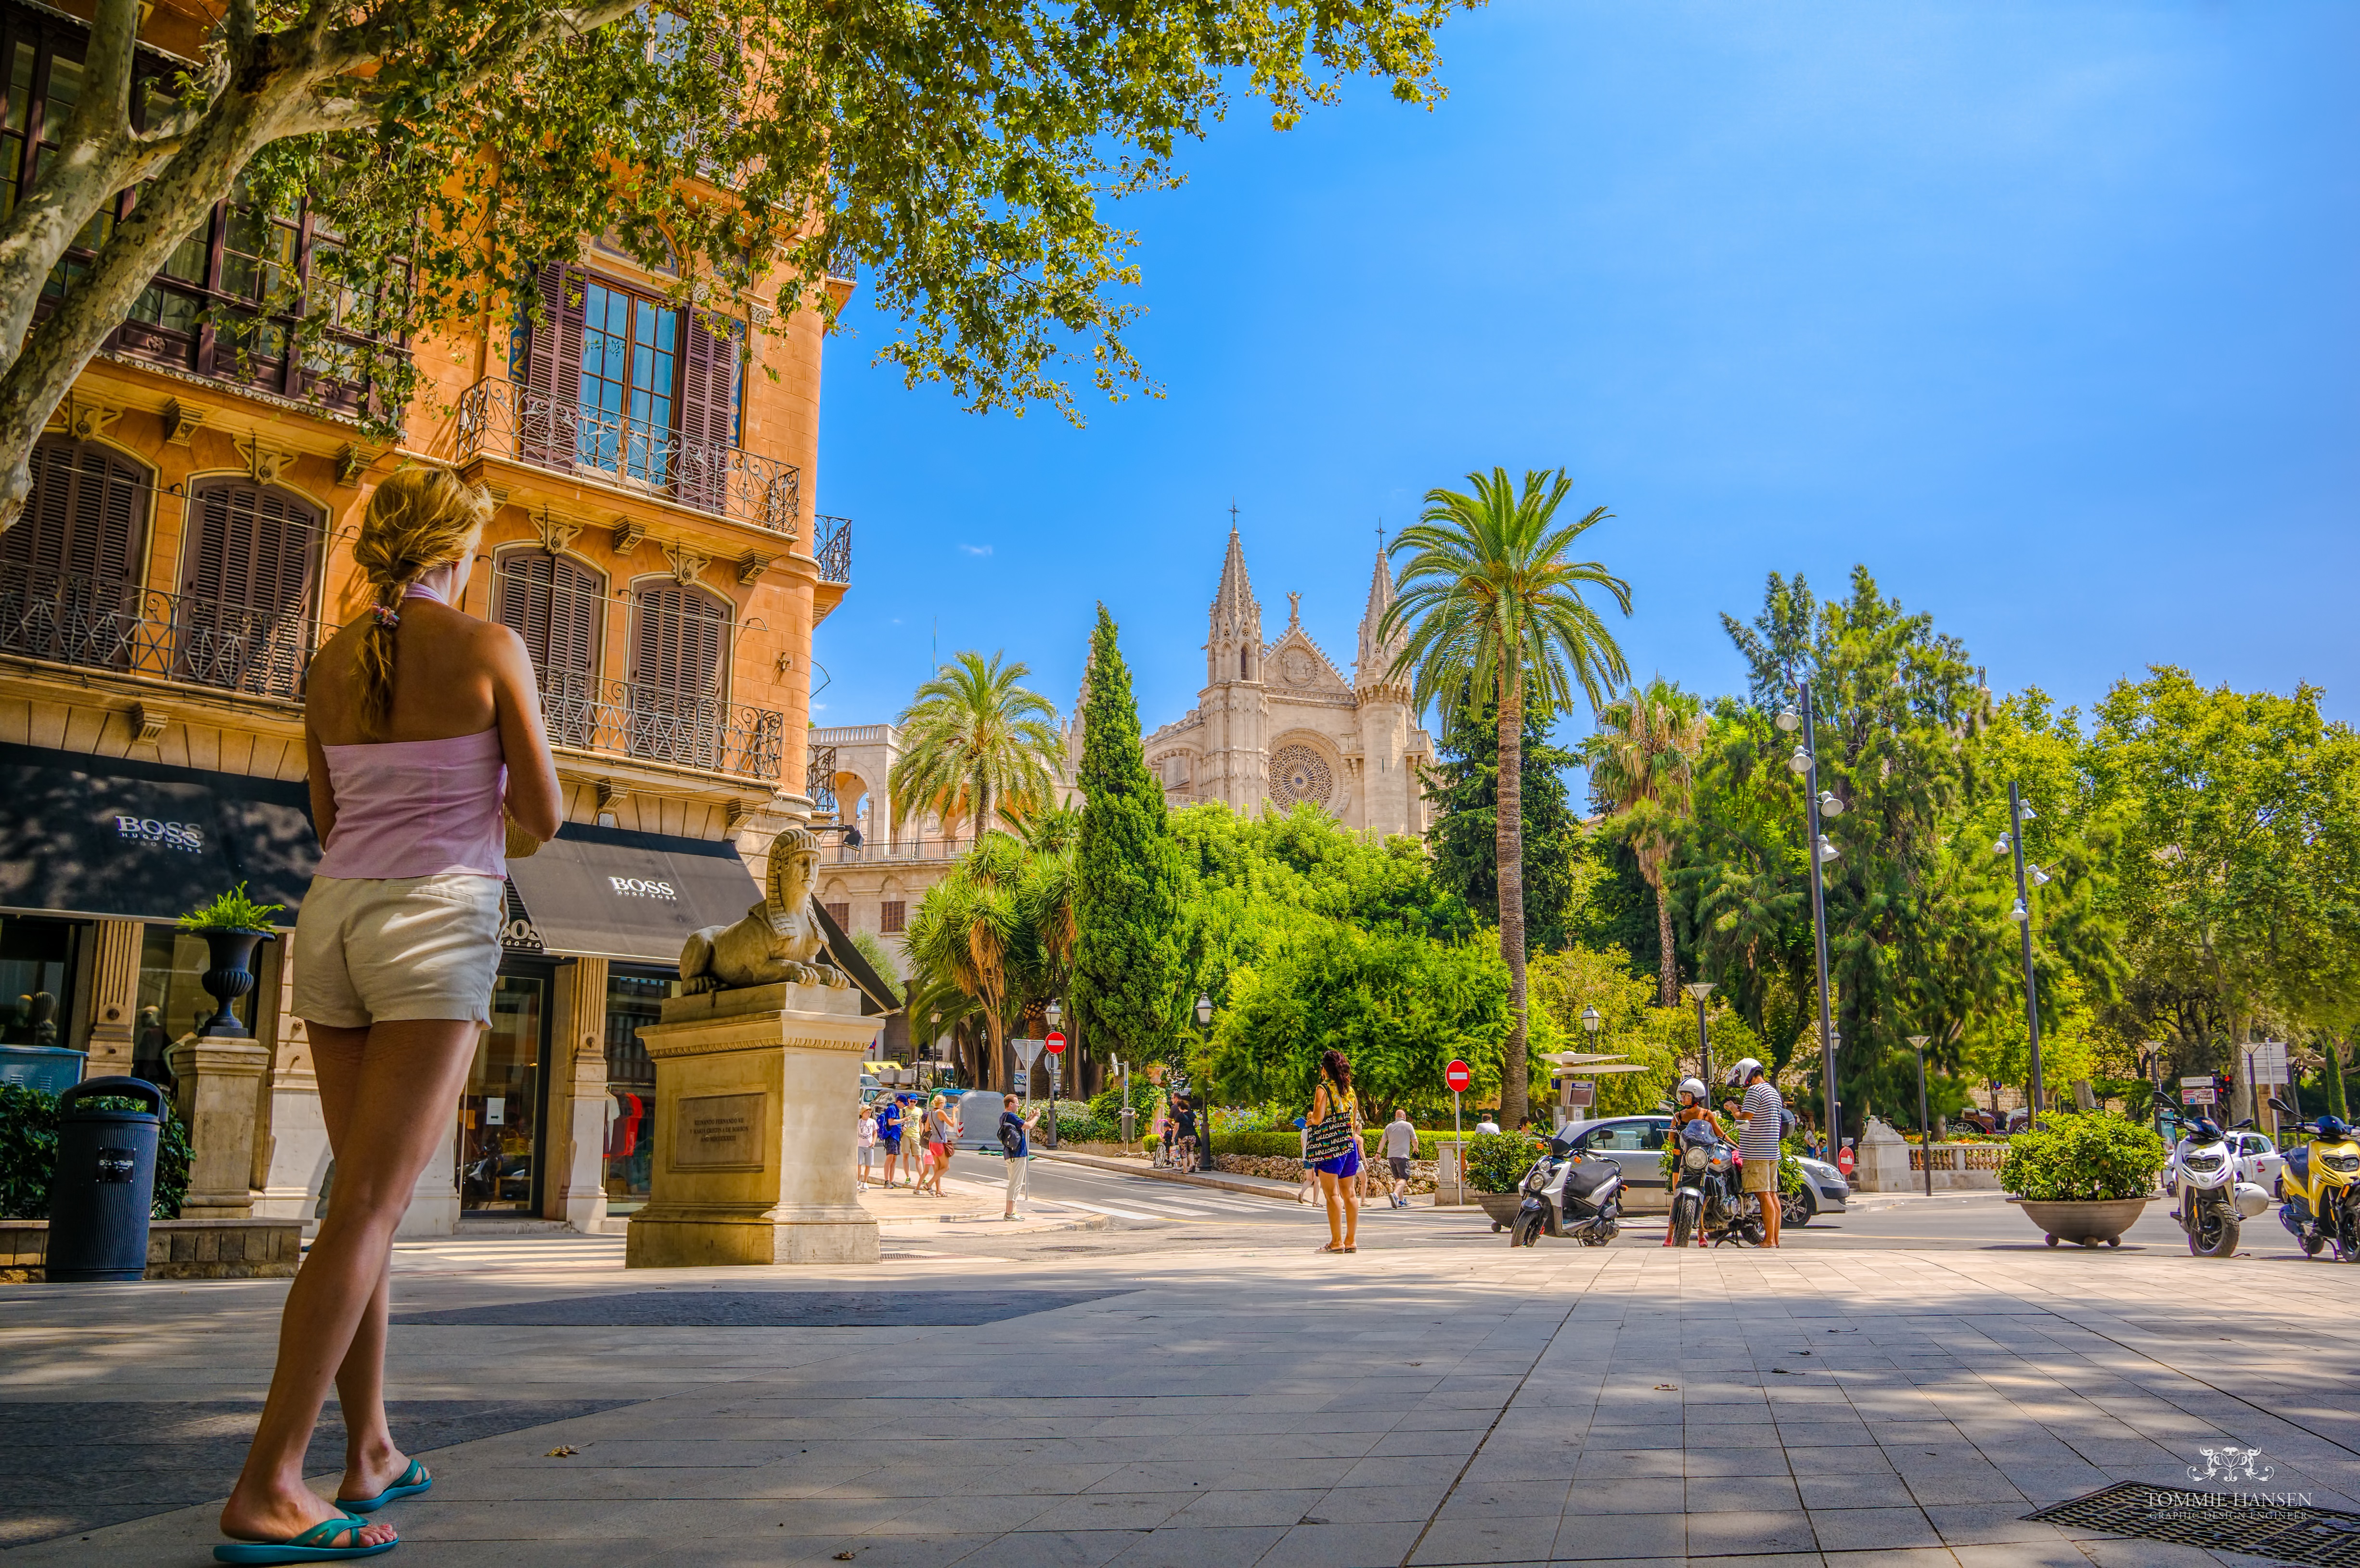 Cathedral / Catholic Church called 'La Seu' and view of Palma De Mallorca